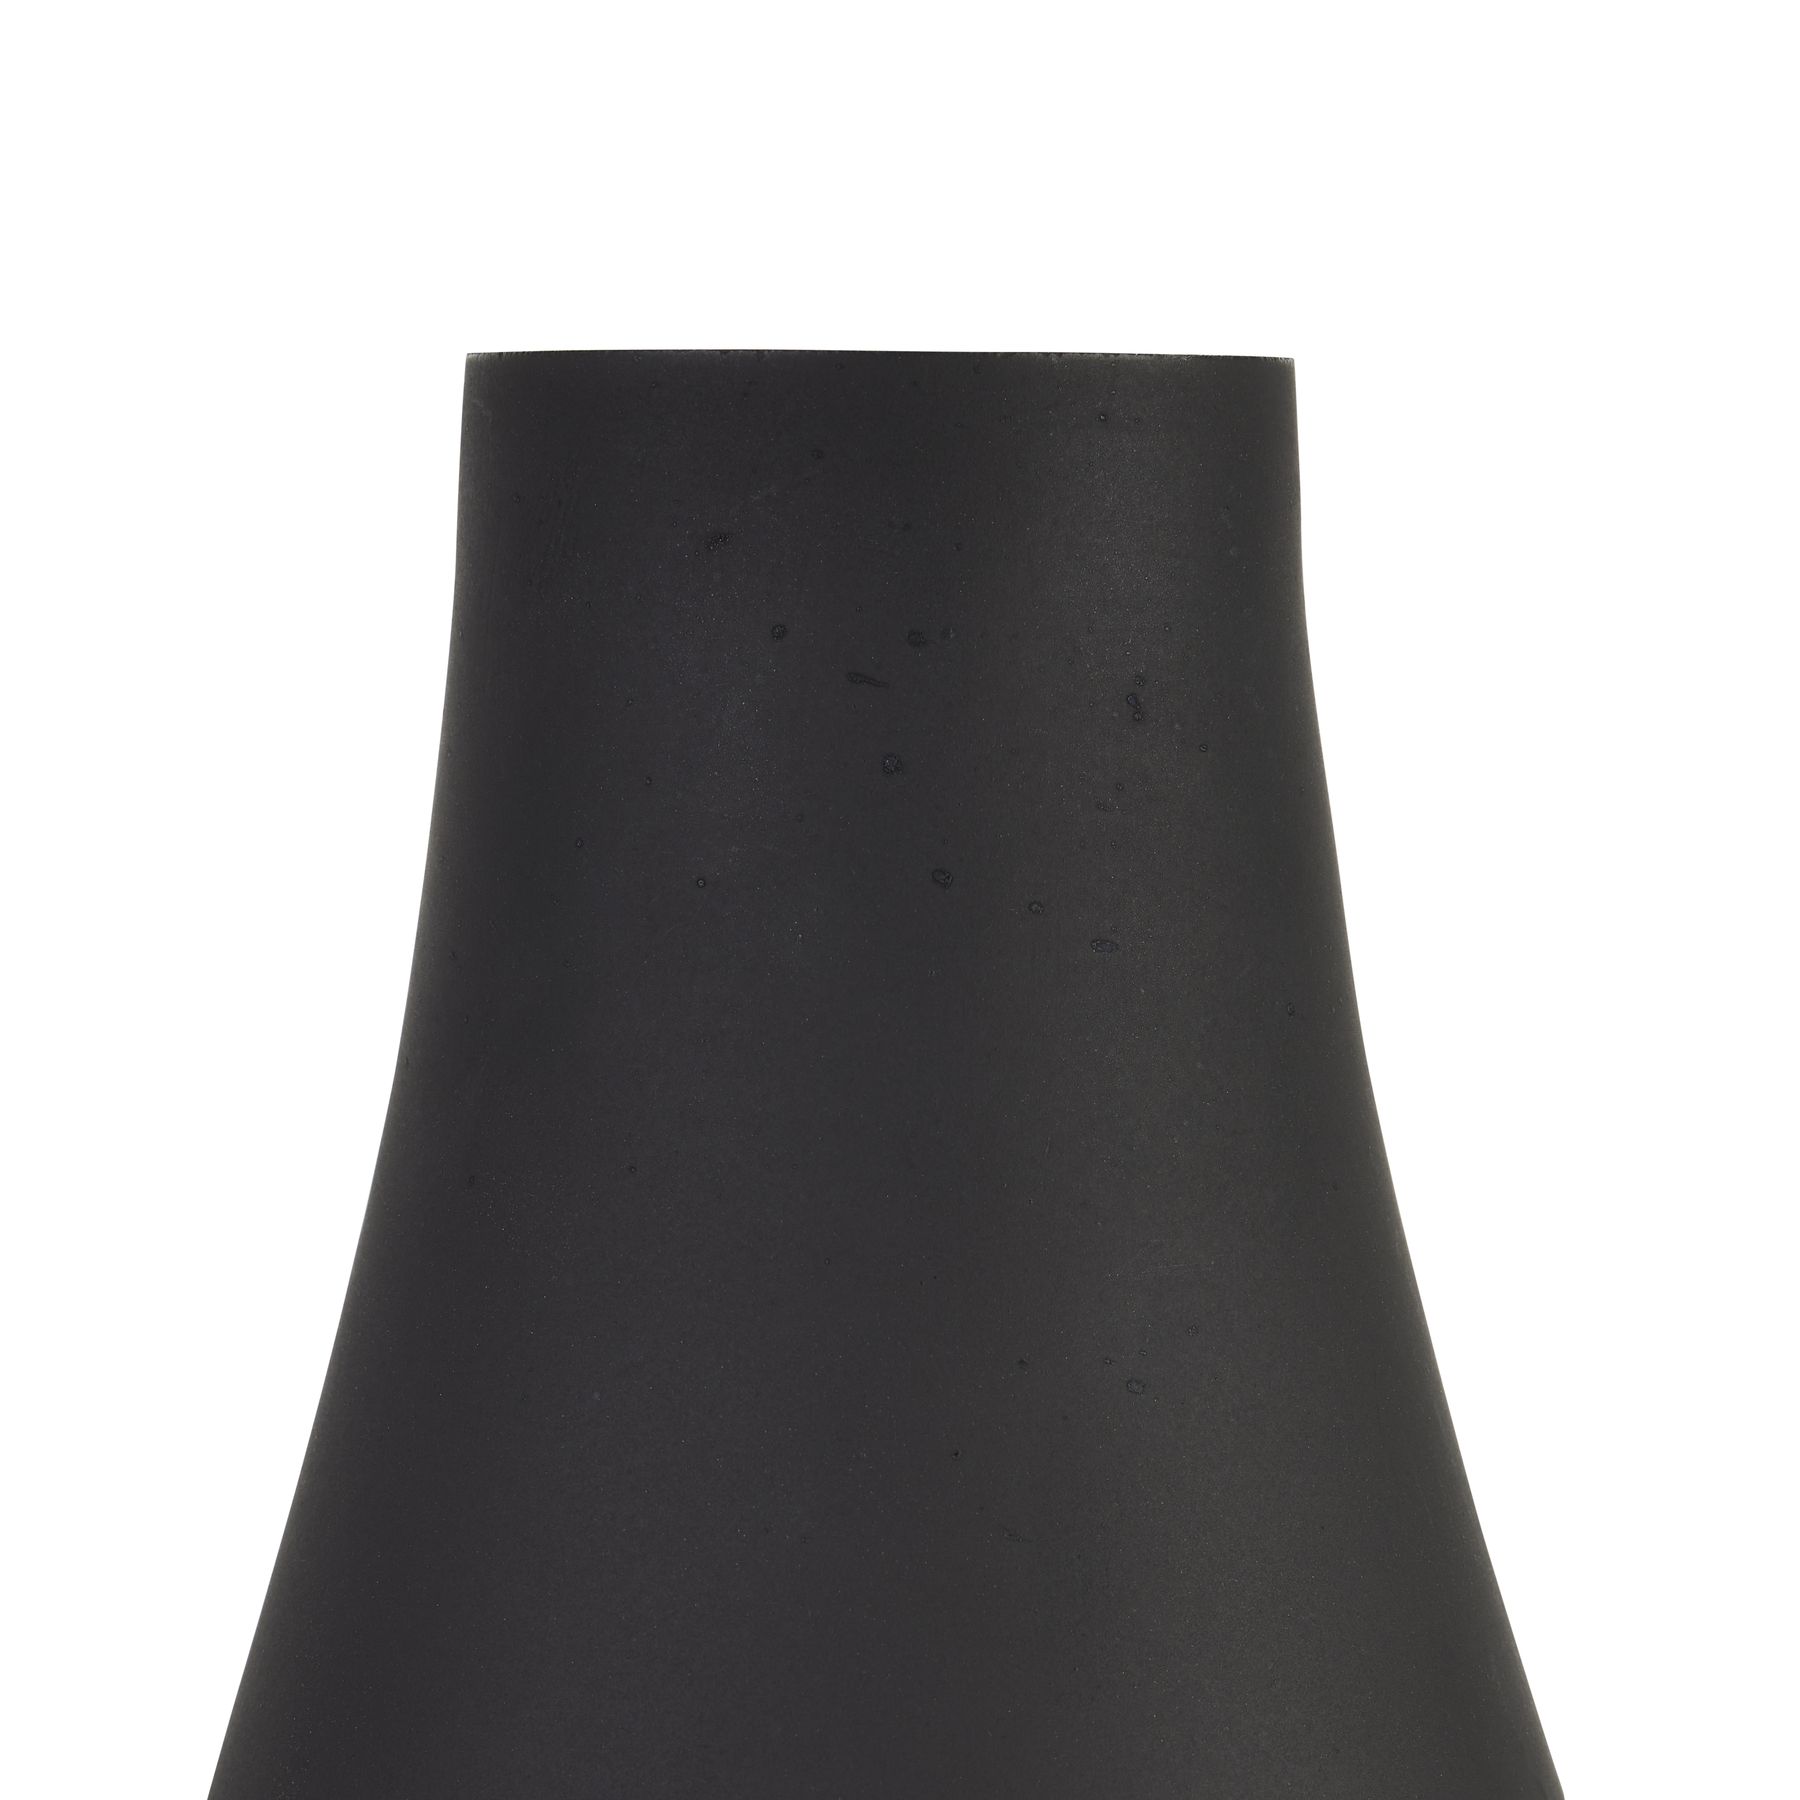 Black Tapered Glass Vase - Image 2